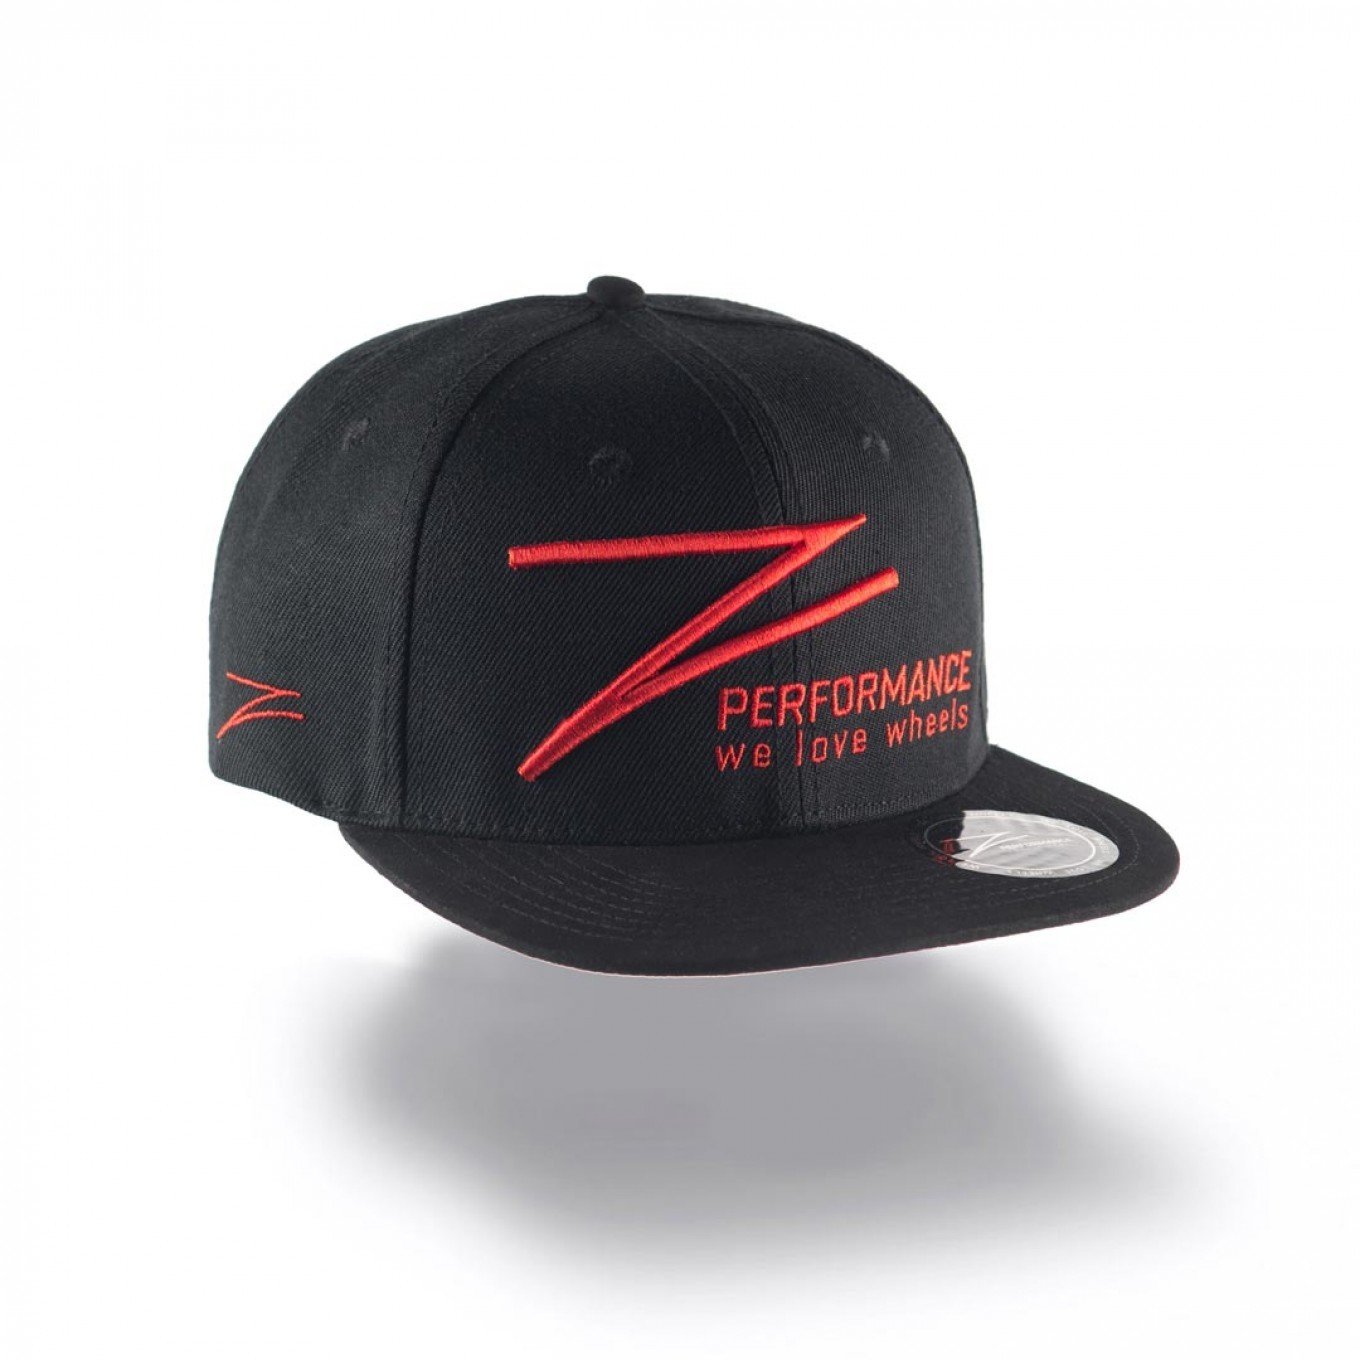 Z-Performance Cap Black/Red